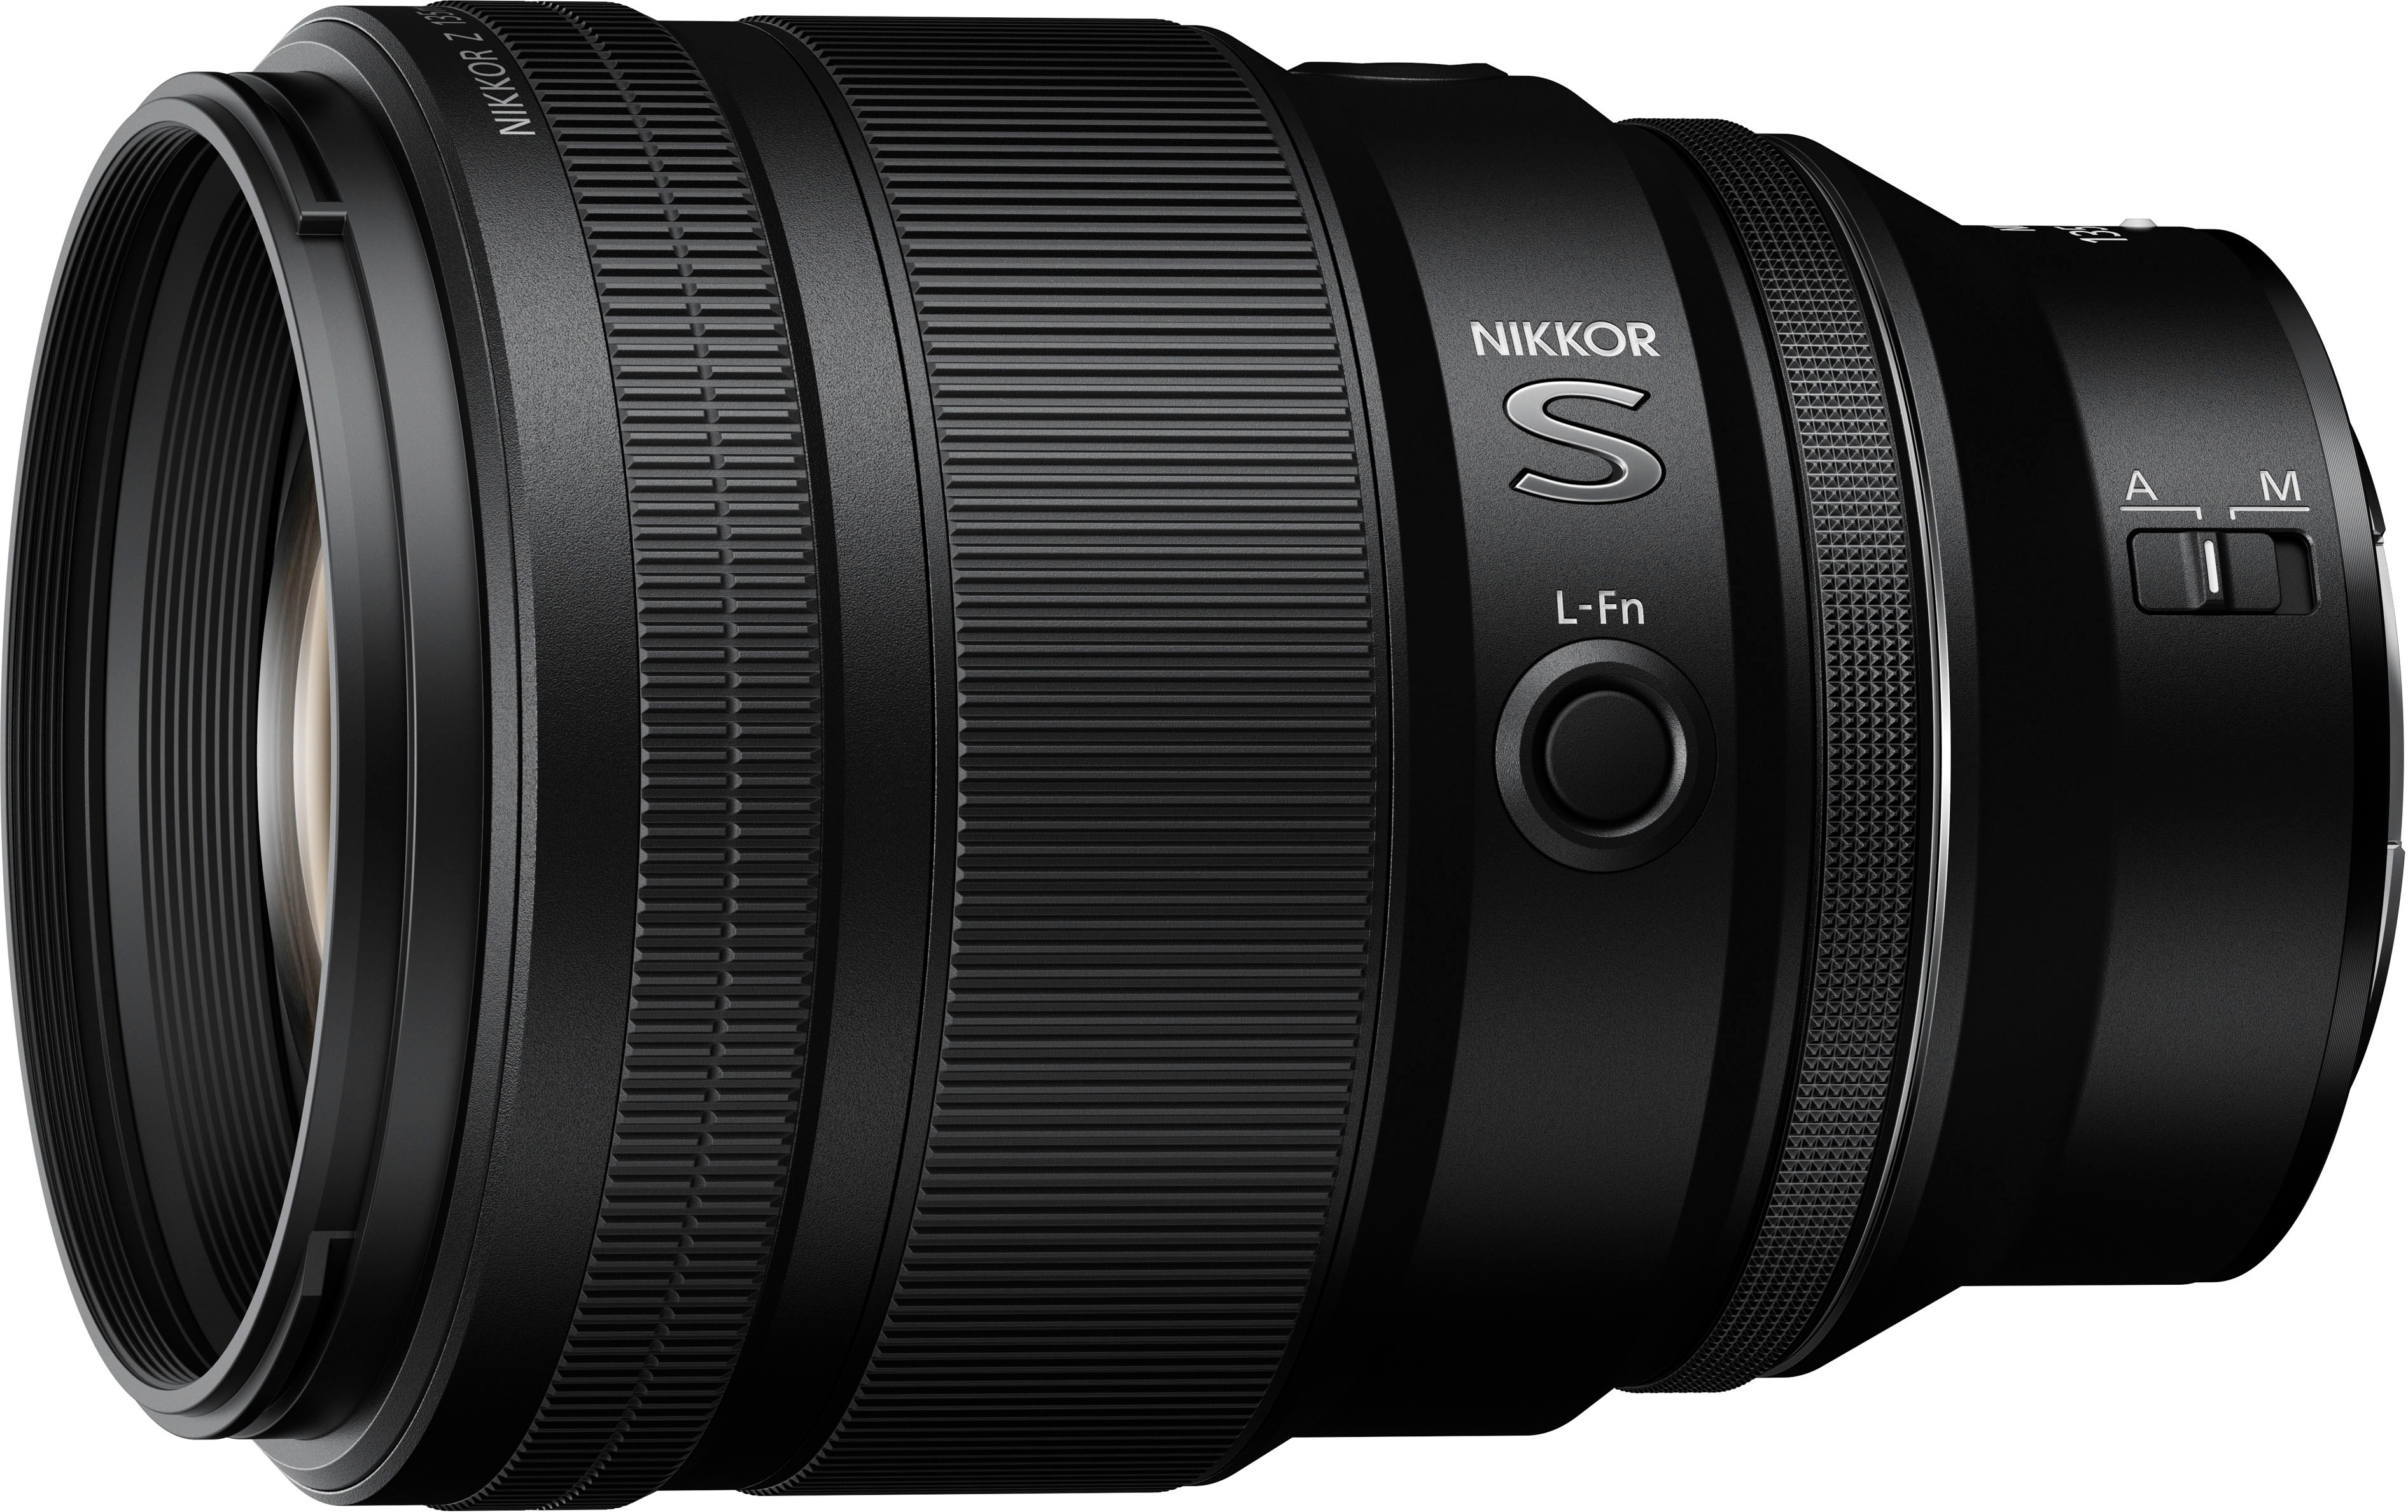 Left View: Canon - EF35mm F2 IS USM Wide-Angle Lens for EOS DSLR Cameras - Black